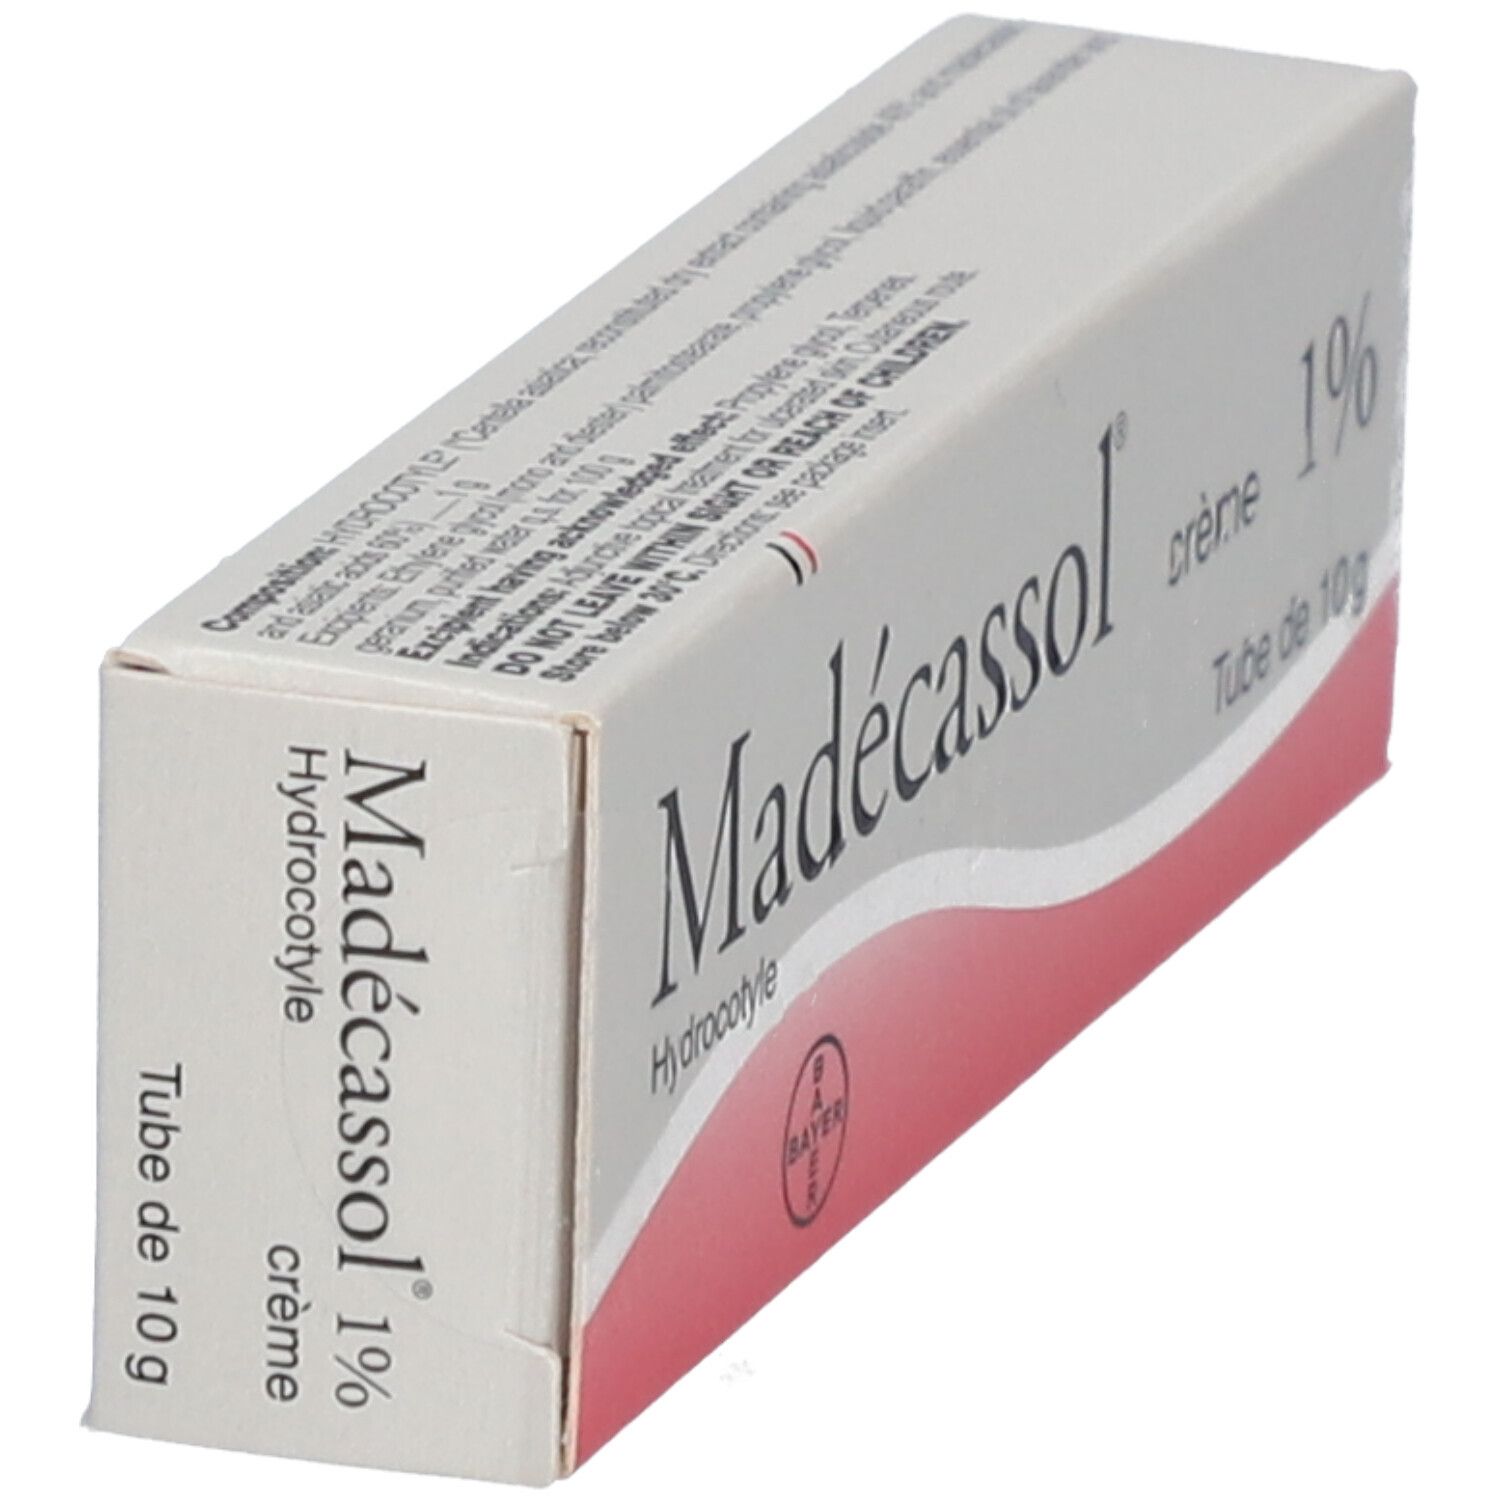 Madecassol : crème cicatrisante et apaisante pour ulcération cutanée